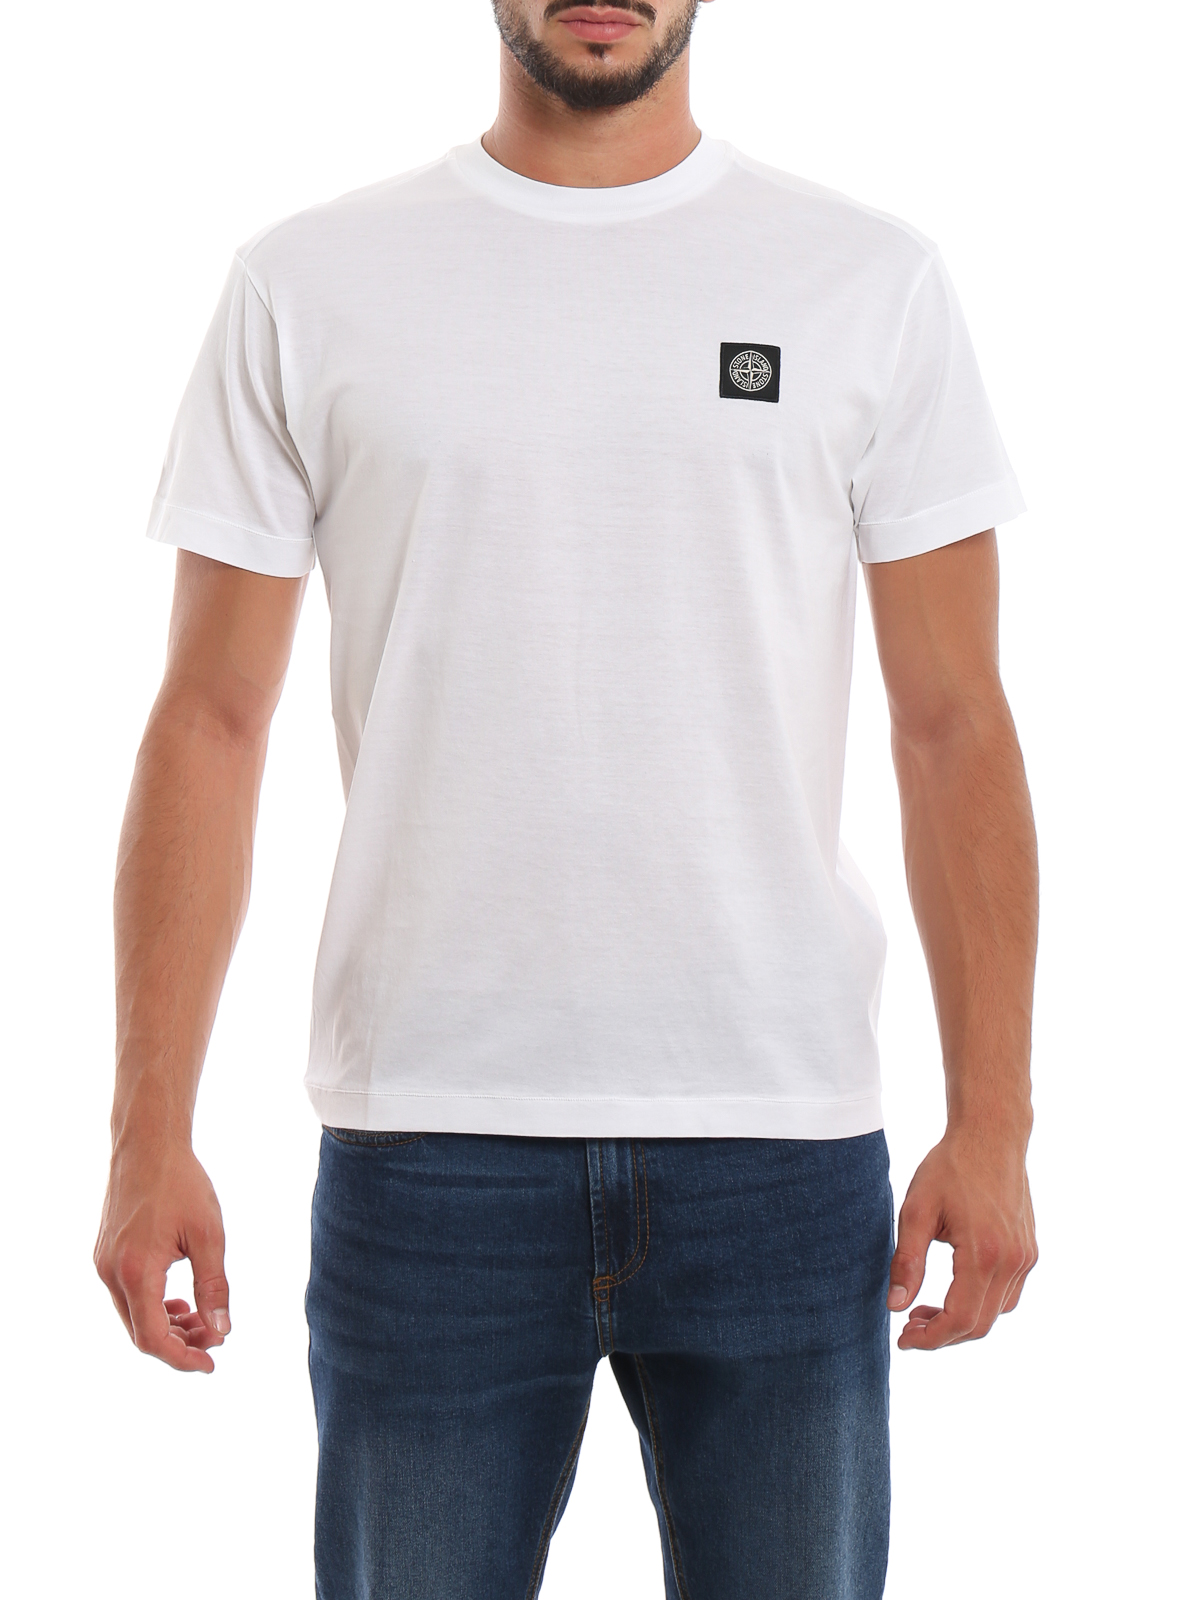 Net zo convergentie Exclusief T-shirts Stone Island - White cotton basic T-shirt - 711524113V0001